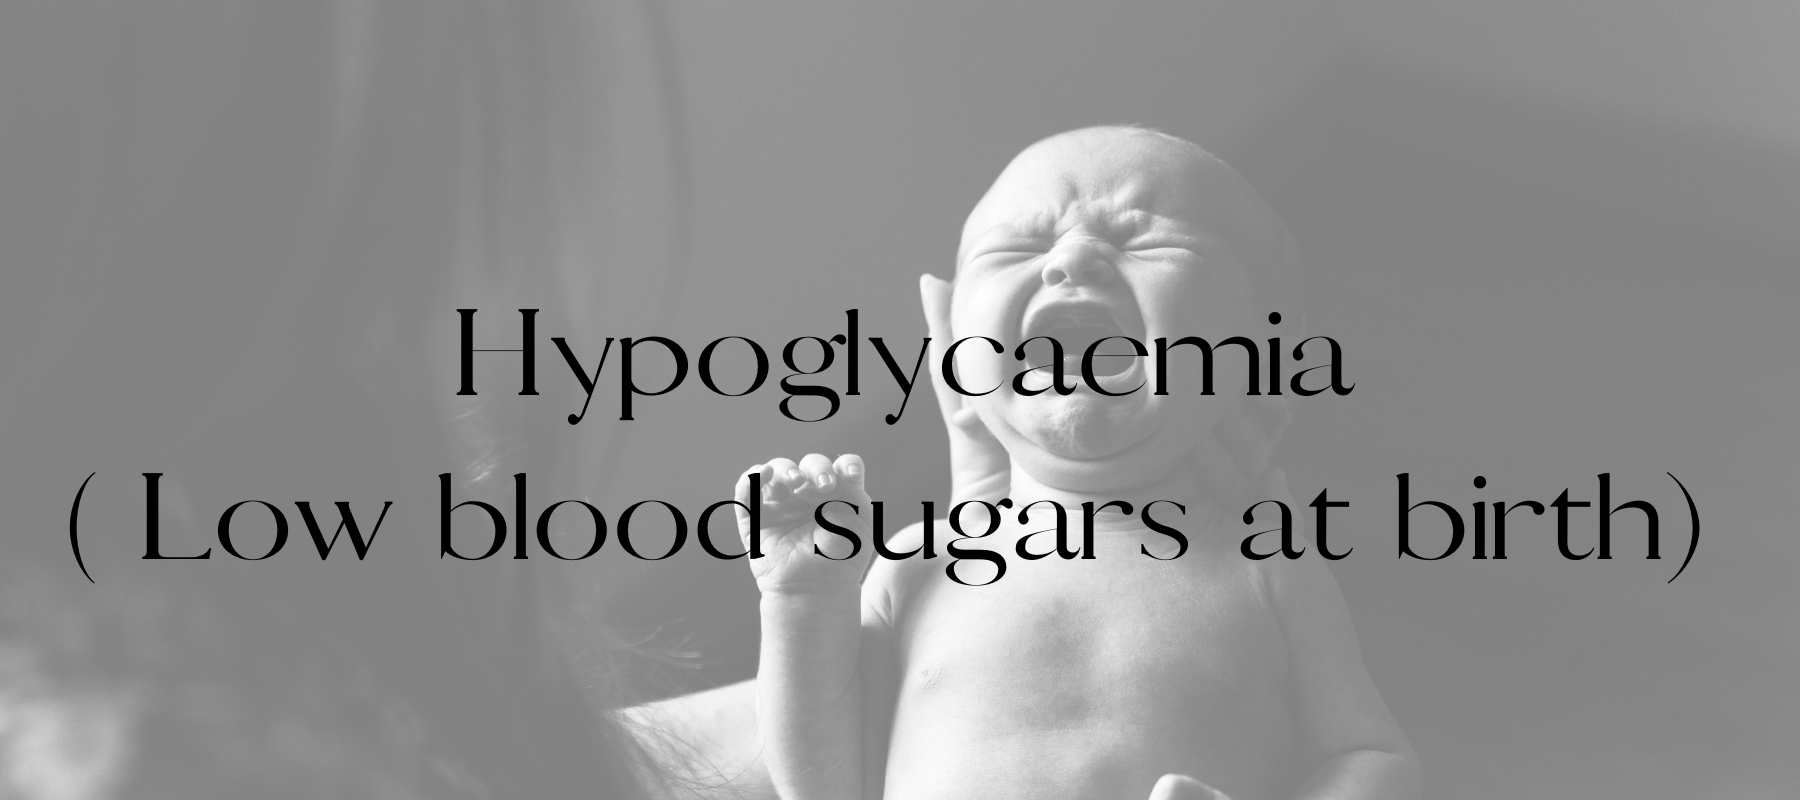 Hypoglycaemia (Low blood sugars at birth)